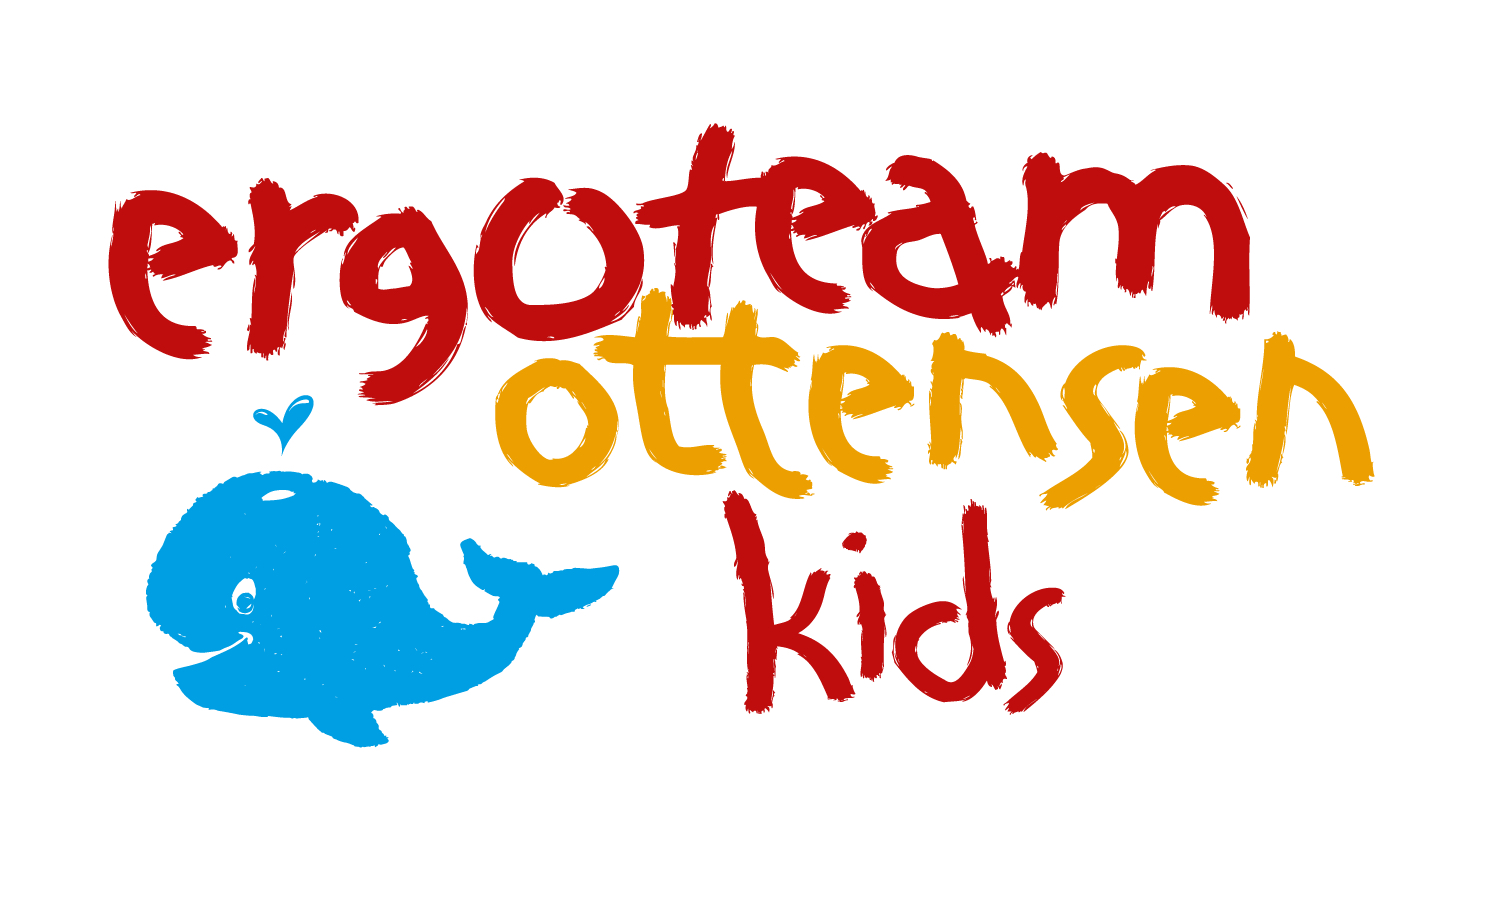 Ergoteam Ottensen Kids Logo